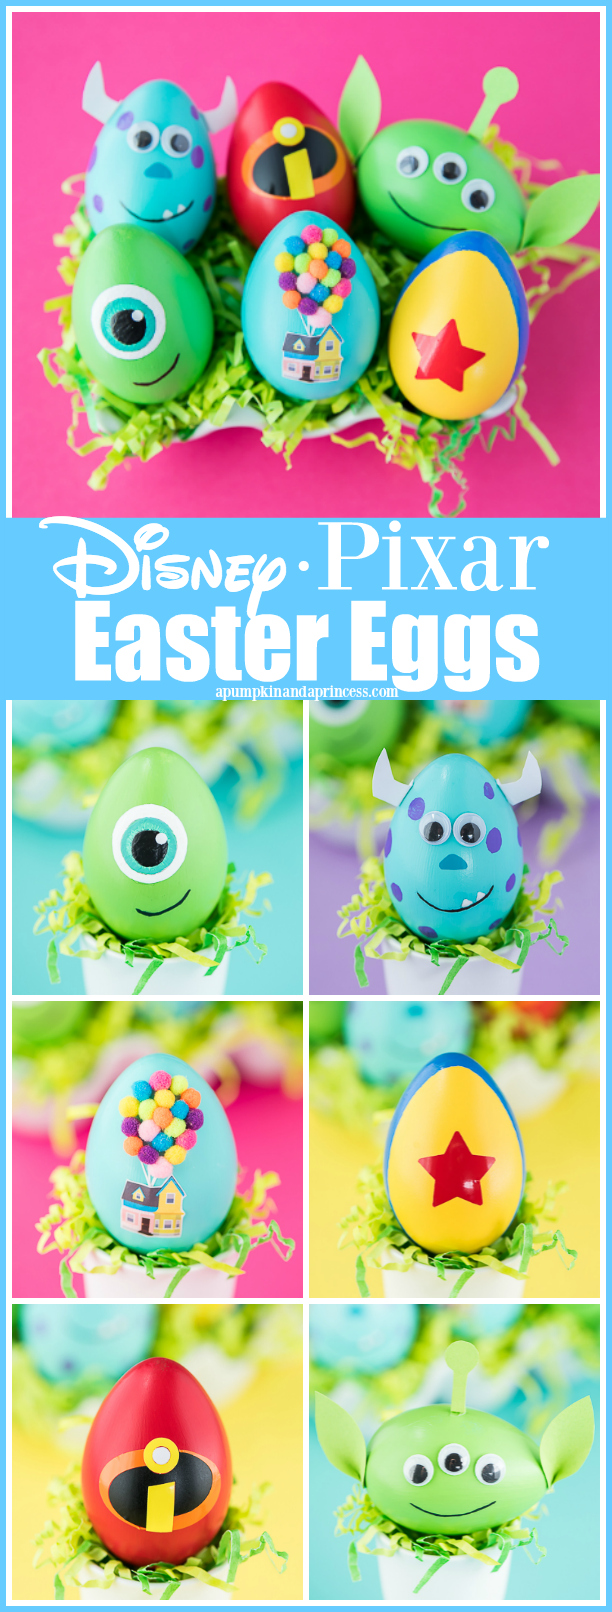 DIY Disney Pixar Easter Eggs – how to make character Easter eggs inspired by Disney Pixar movies.